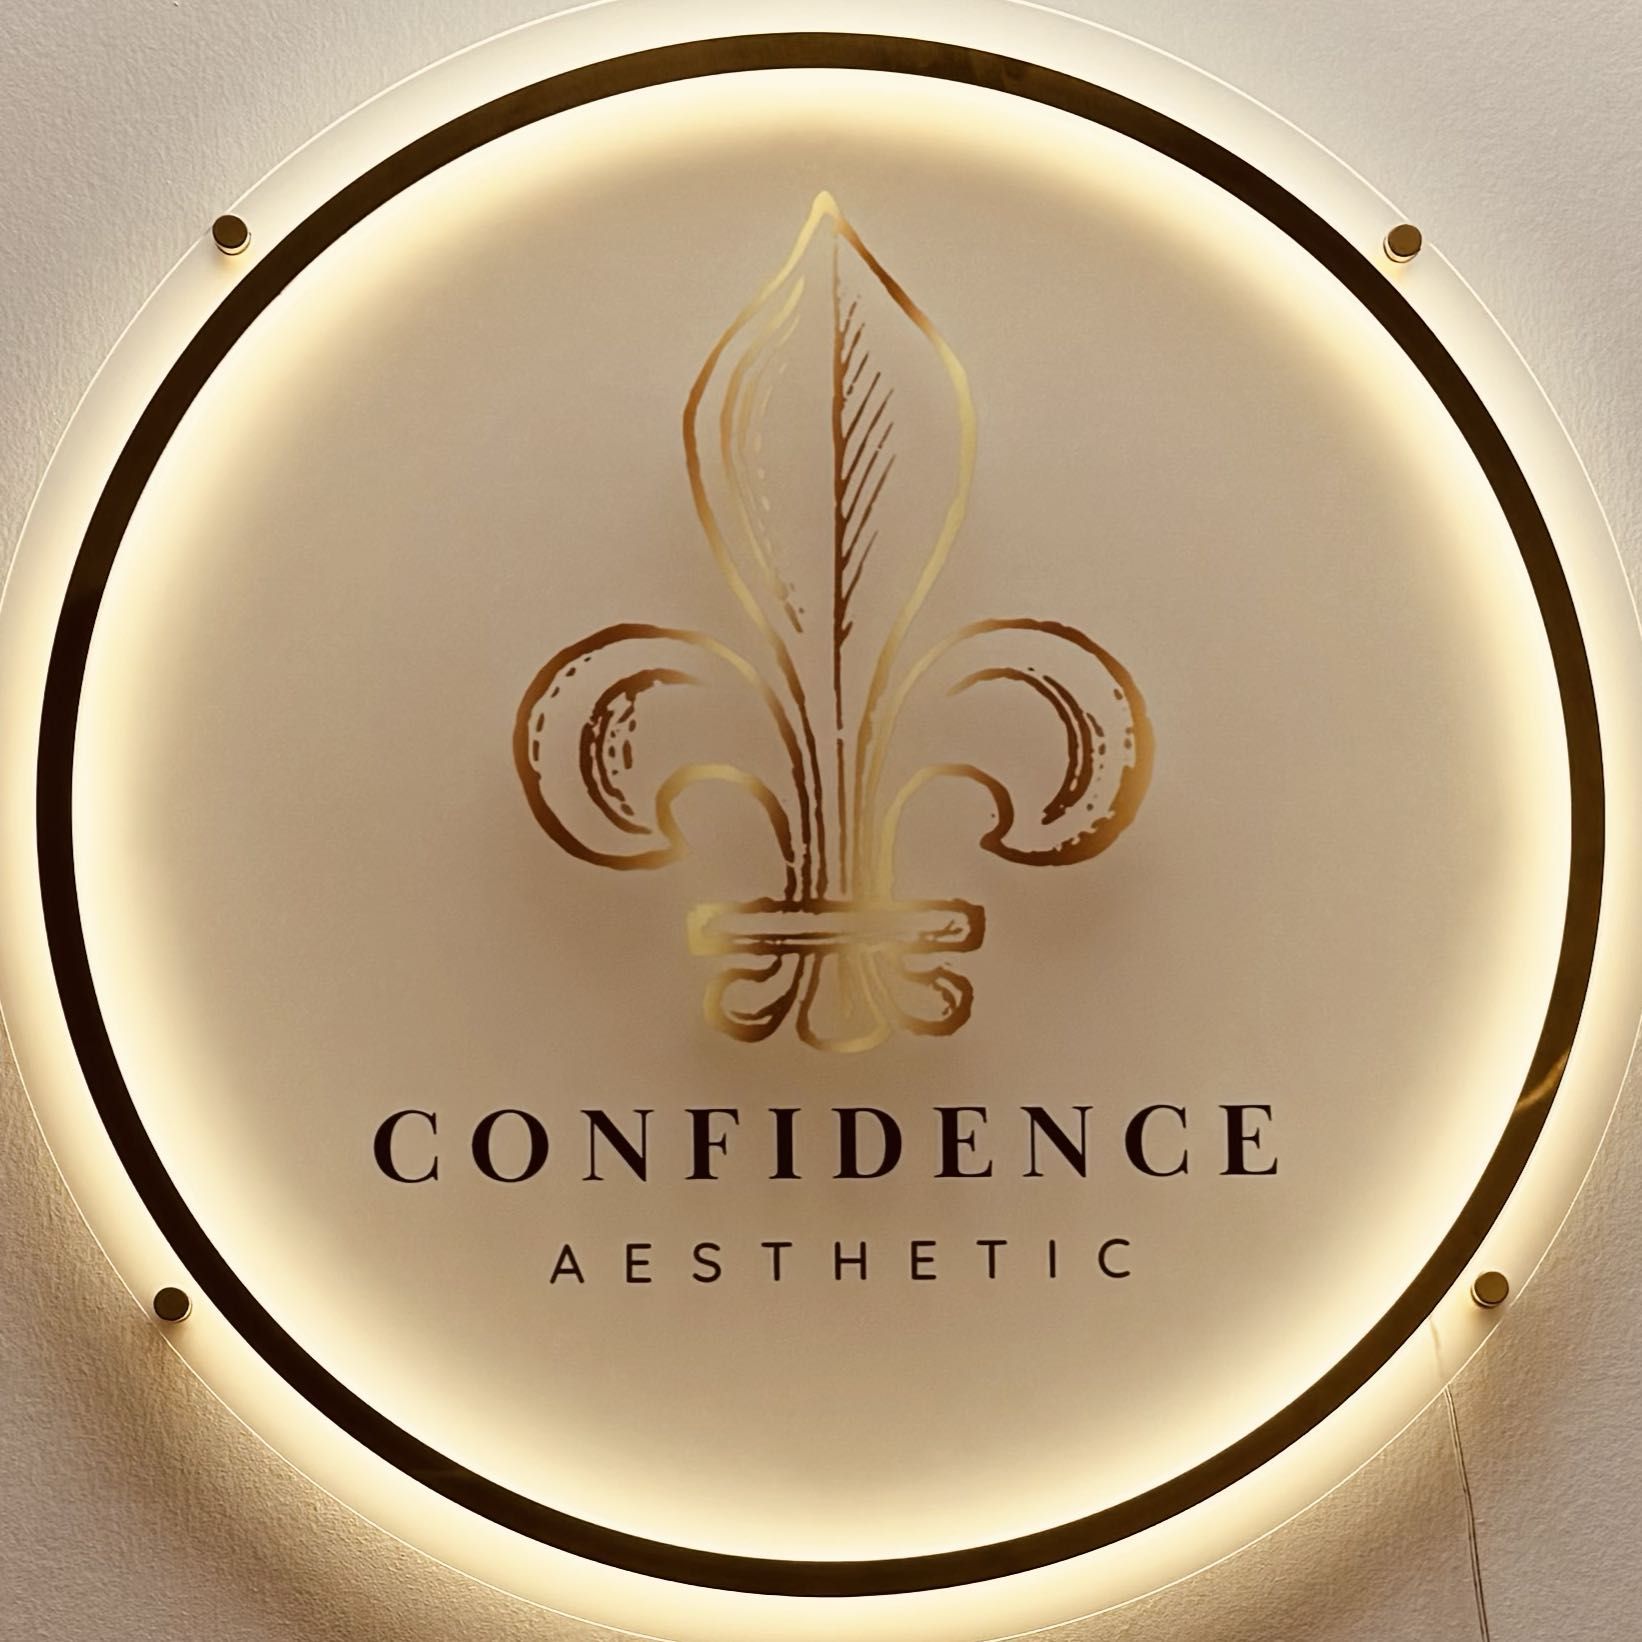 Confidence Aesthetic, 8865 Commodity Circle, Orlando, 32819